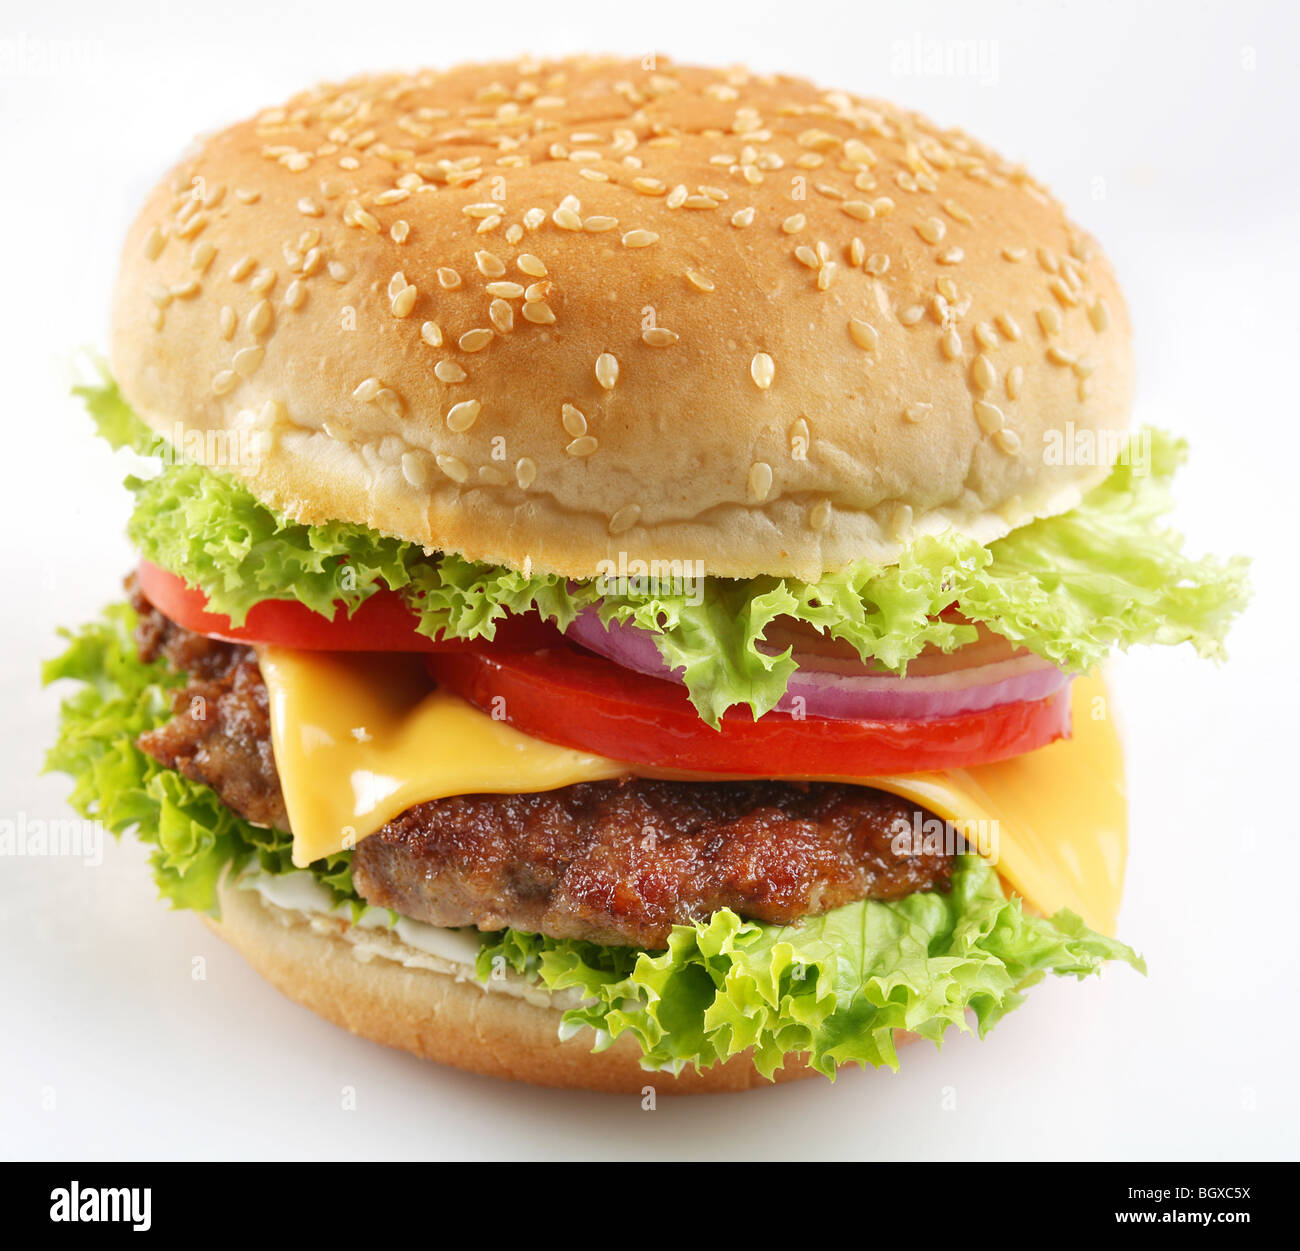 Cheeseburger on a white background Stock Photo